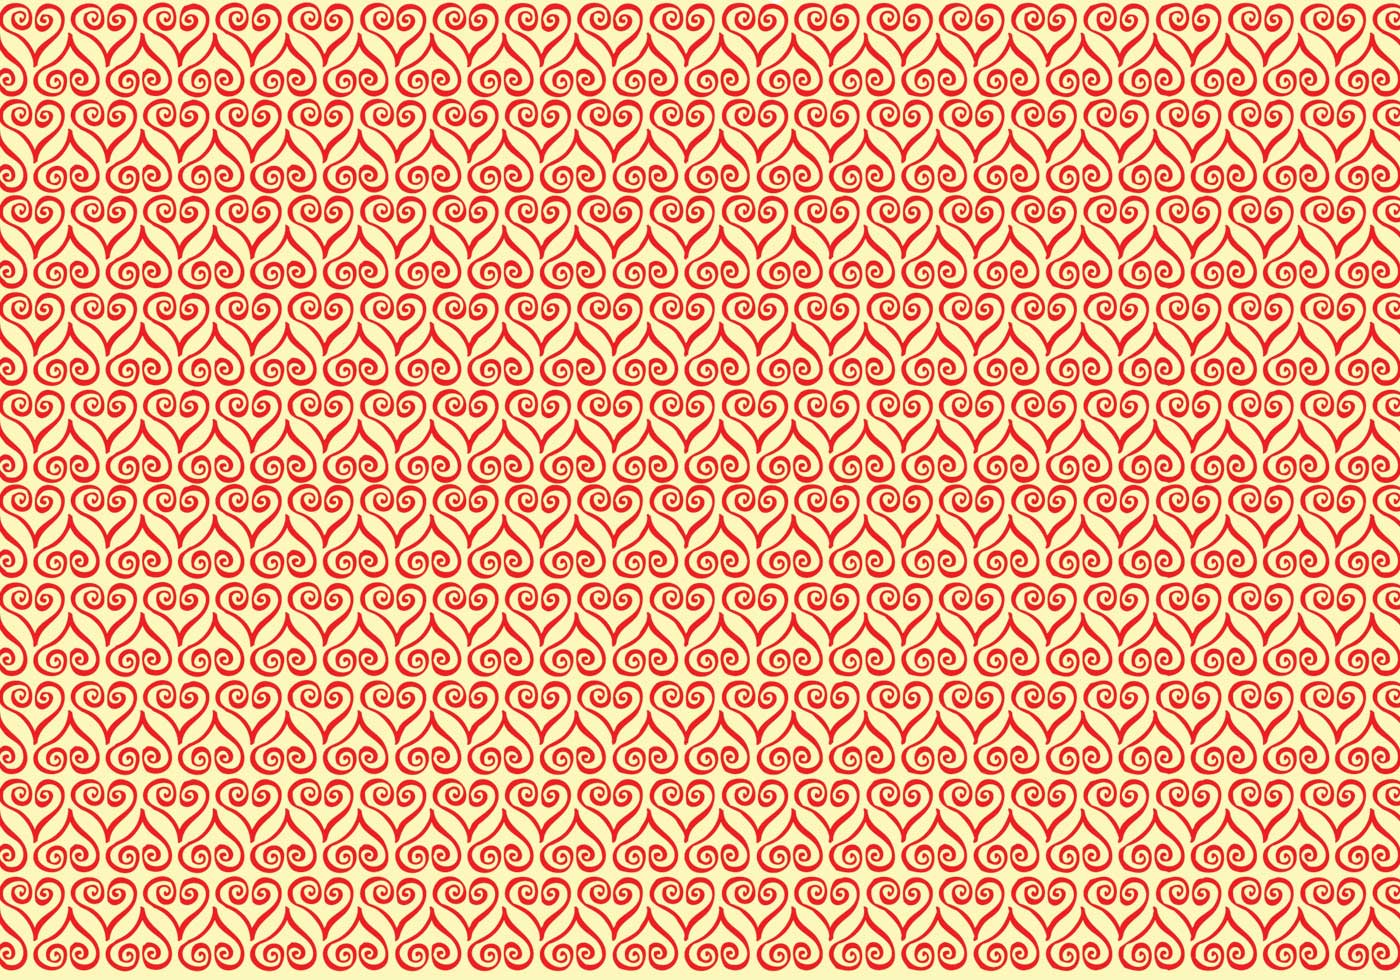 Tiny heart pattern powerpoint background - Pattern PPT Background